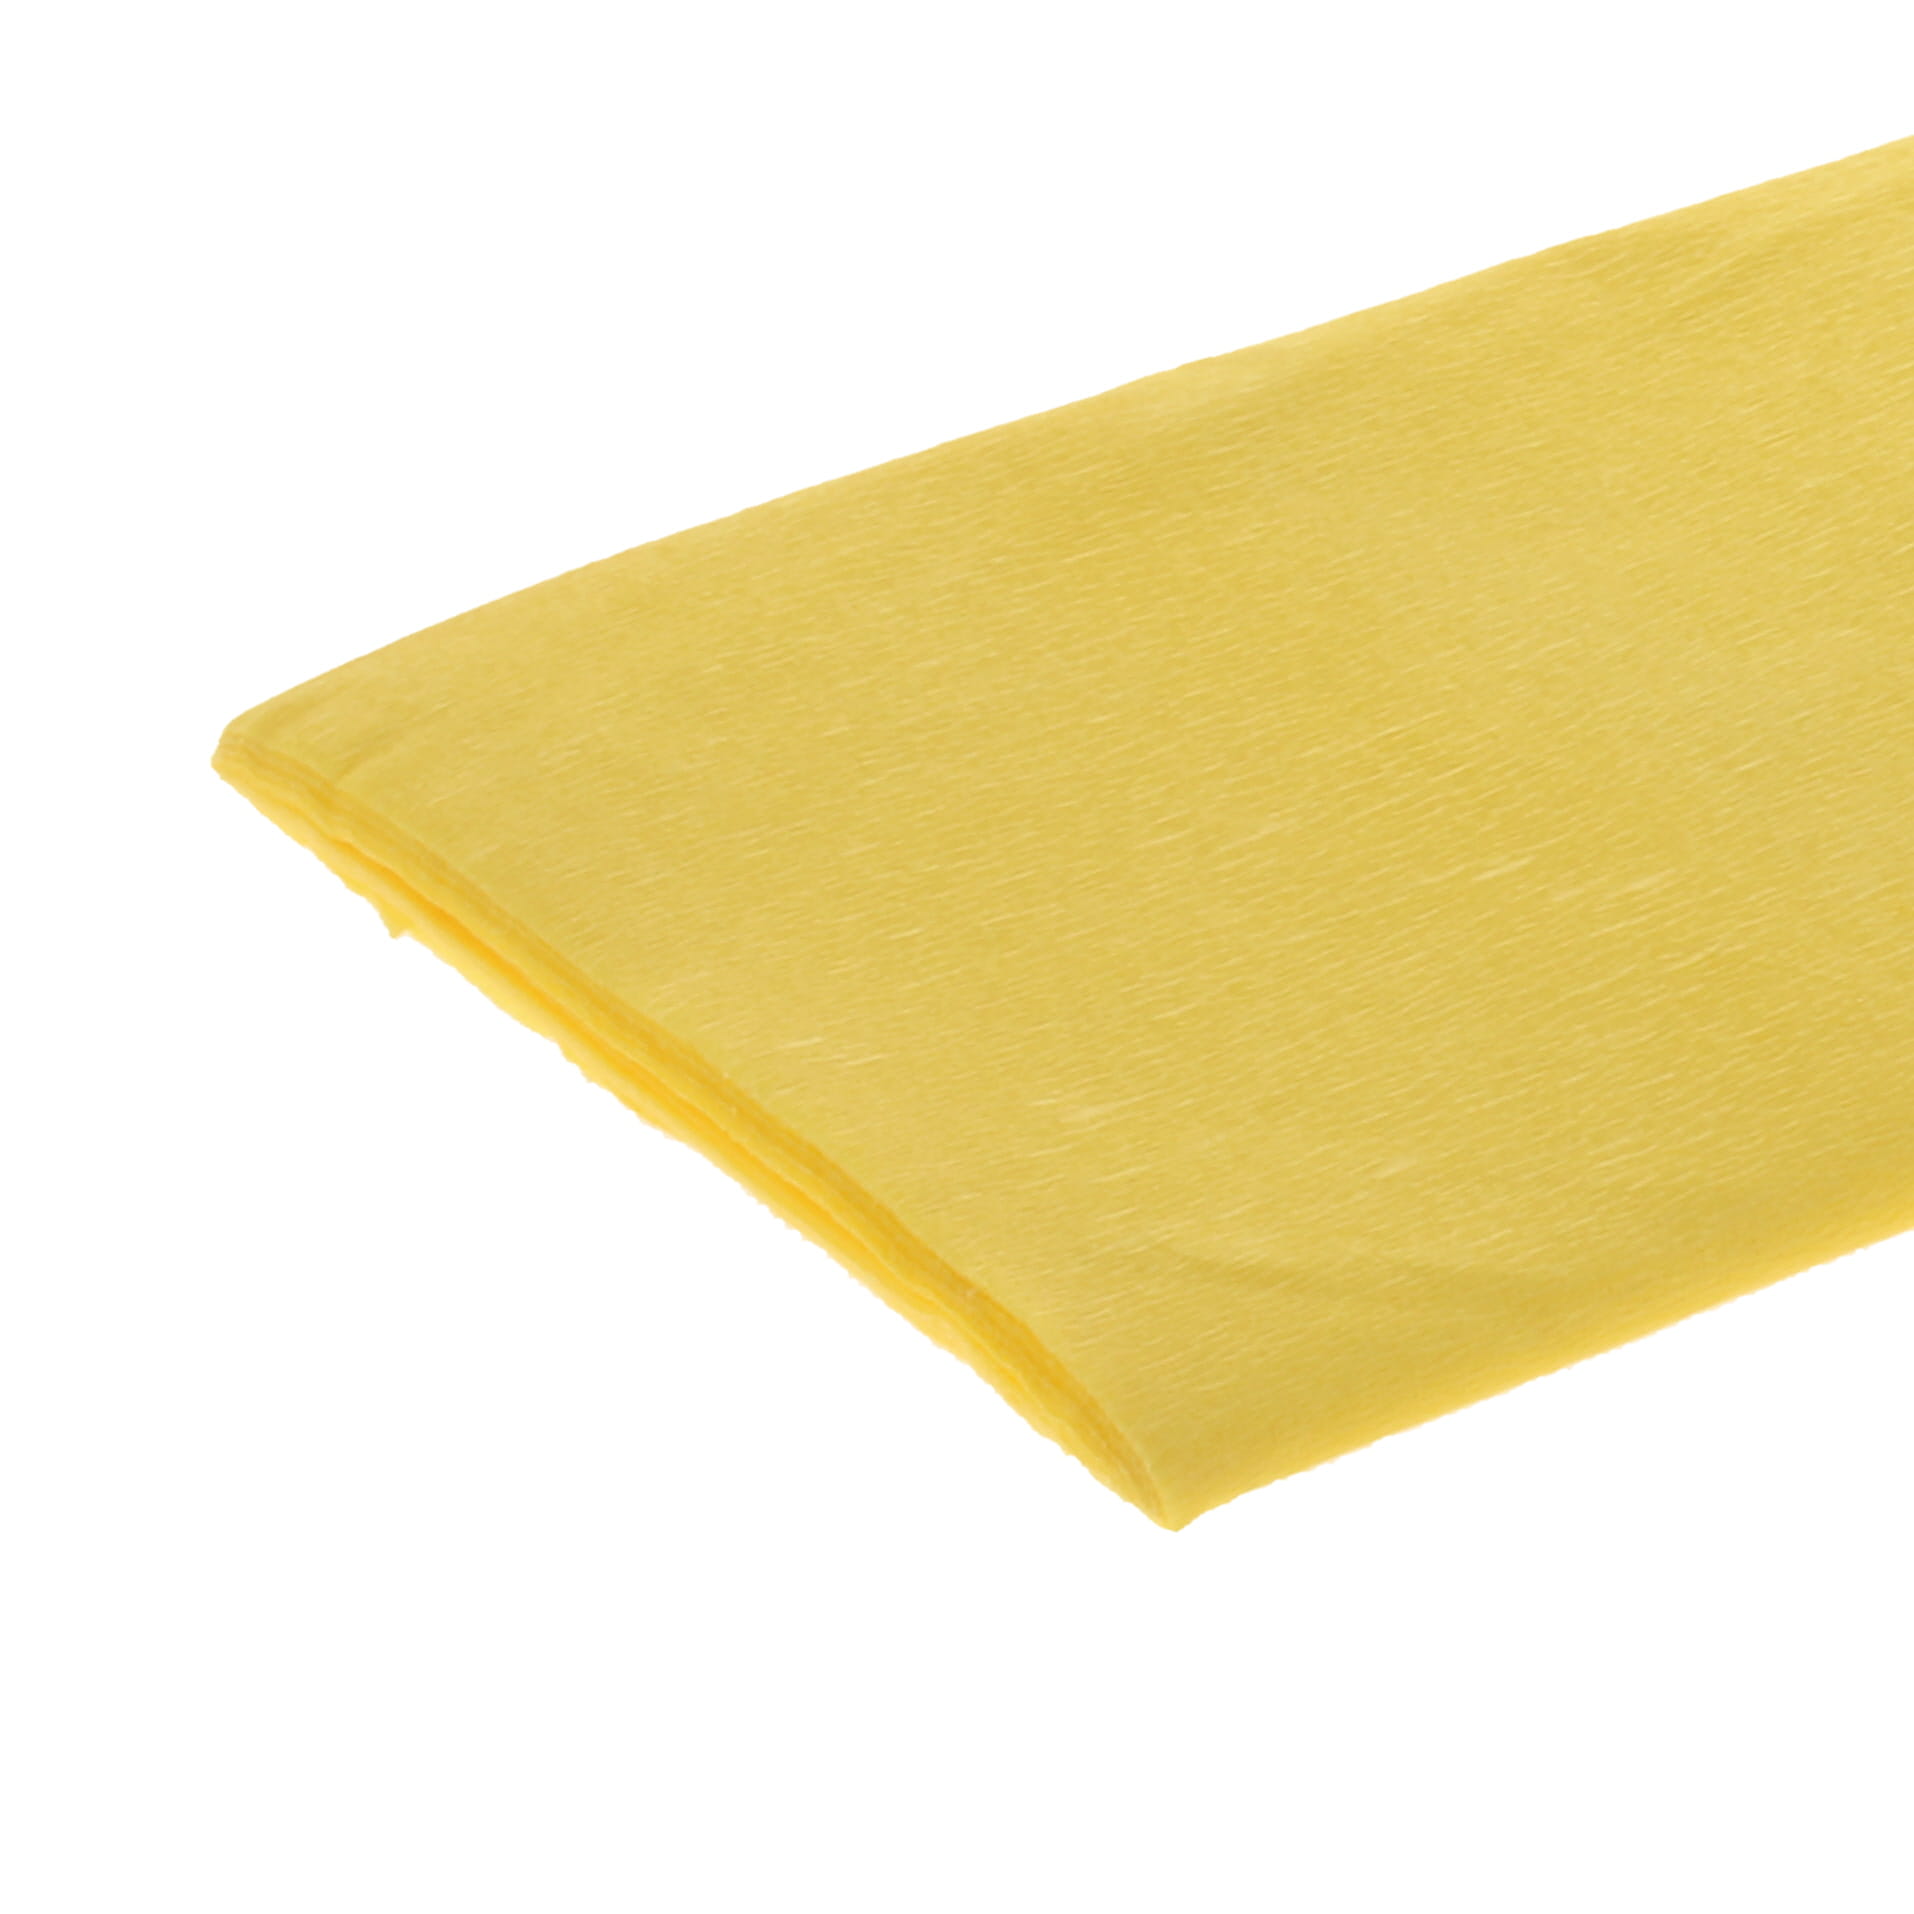 Crepe Paper Yellow - 51cm x 3m - Pack of 10